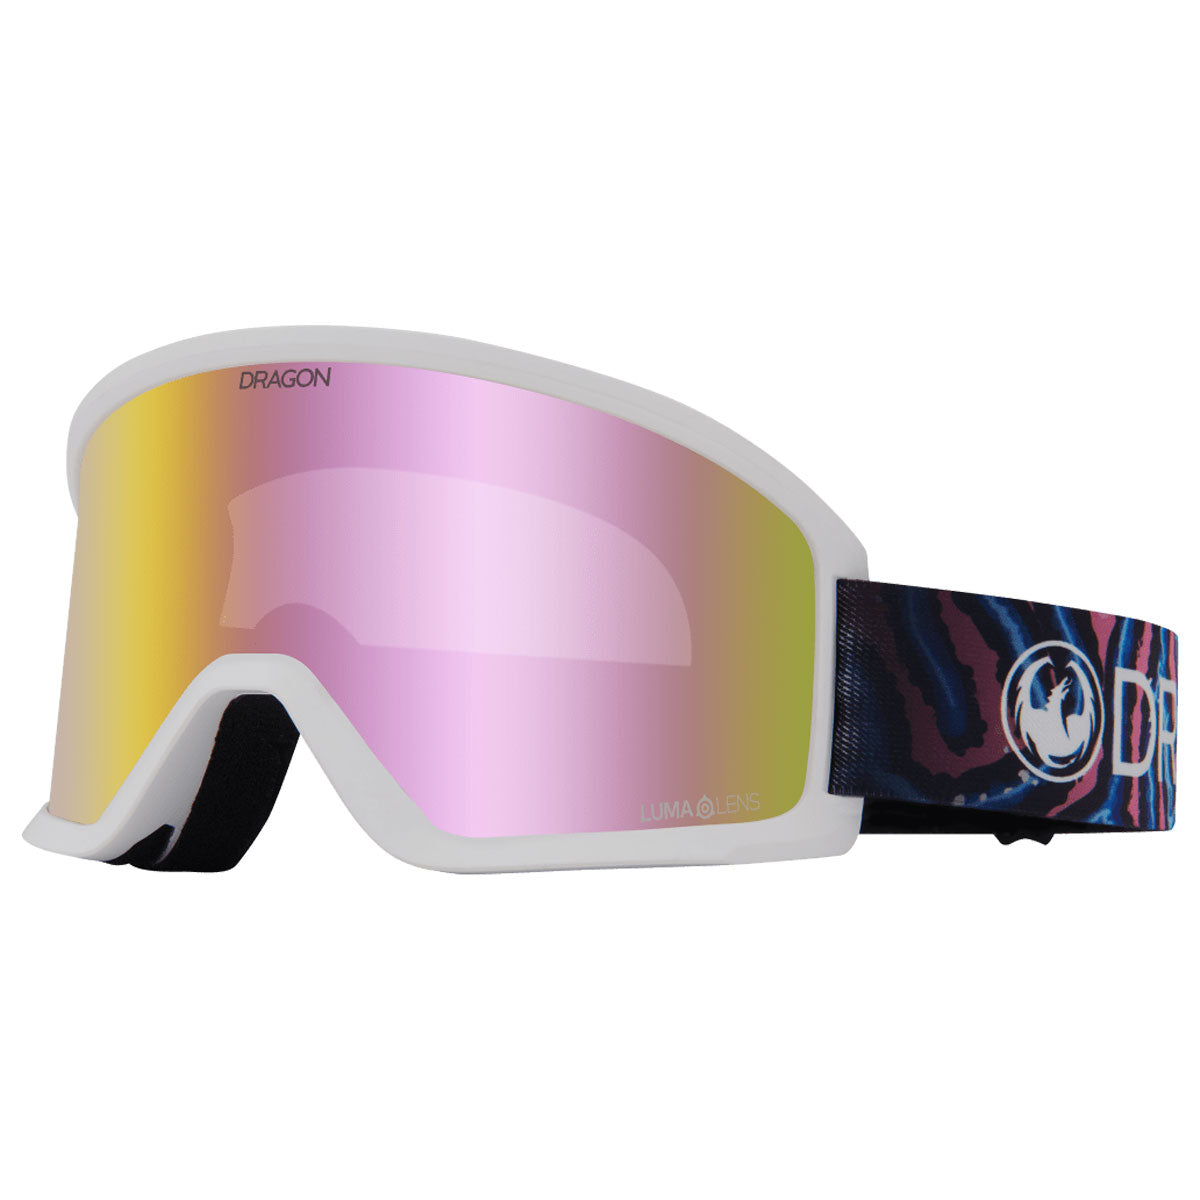 Dragon Eyewear DX3 OTG Snowboard Goggles - Reef/Pink Ion image 1